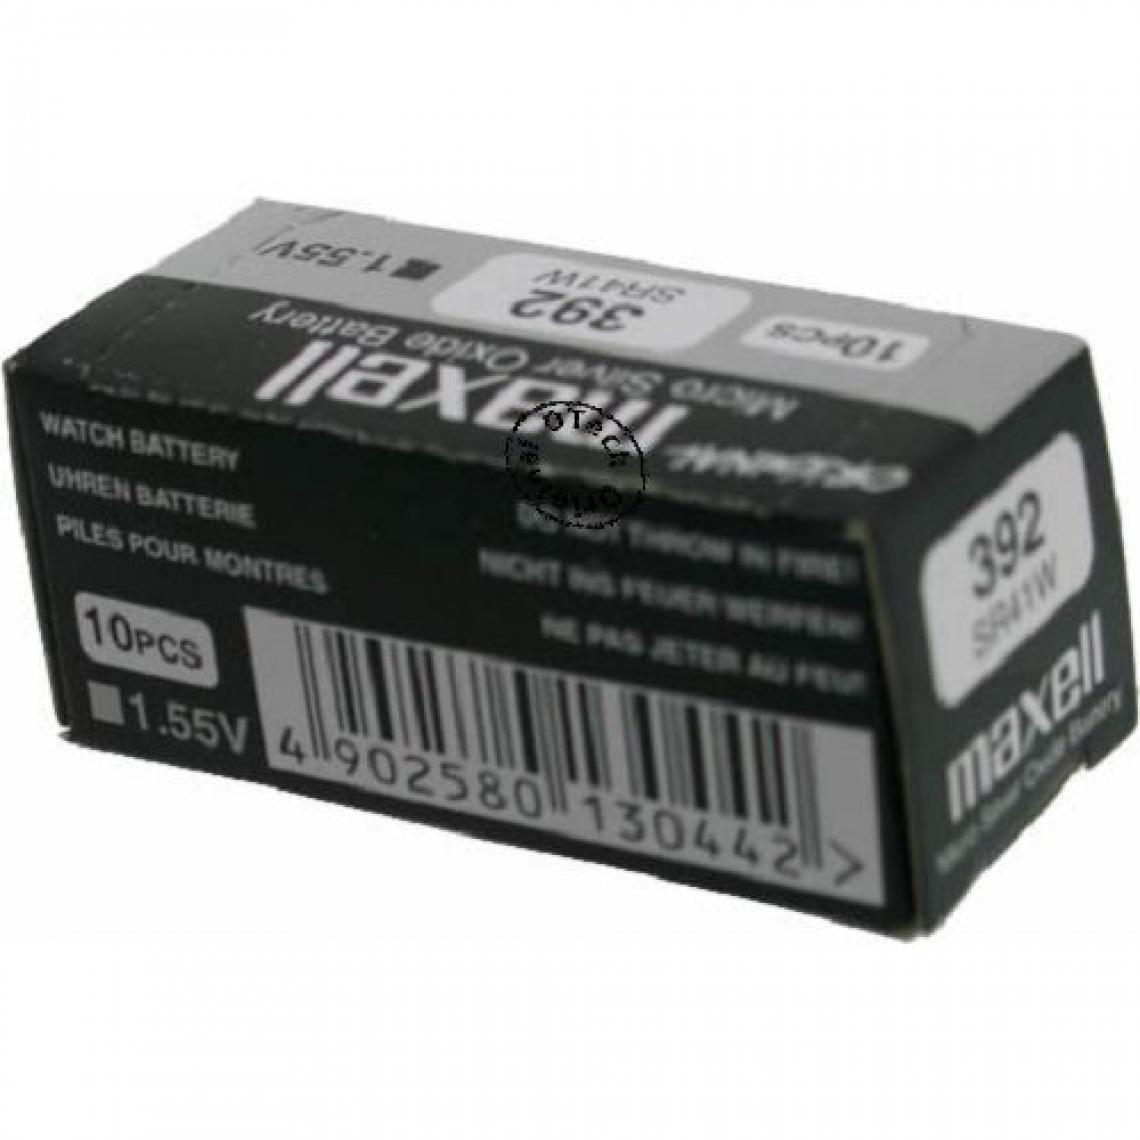 Otech - Pack de 10 piles maxell pour MAXELL SR41W - Piles rechargeables